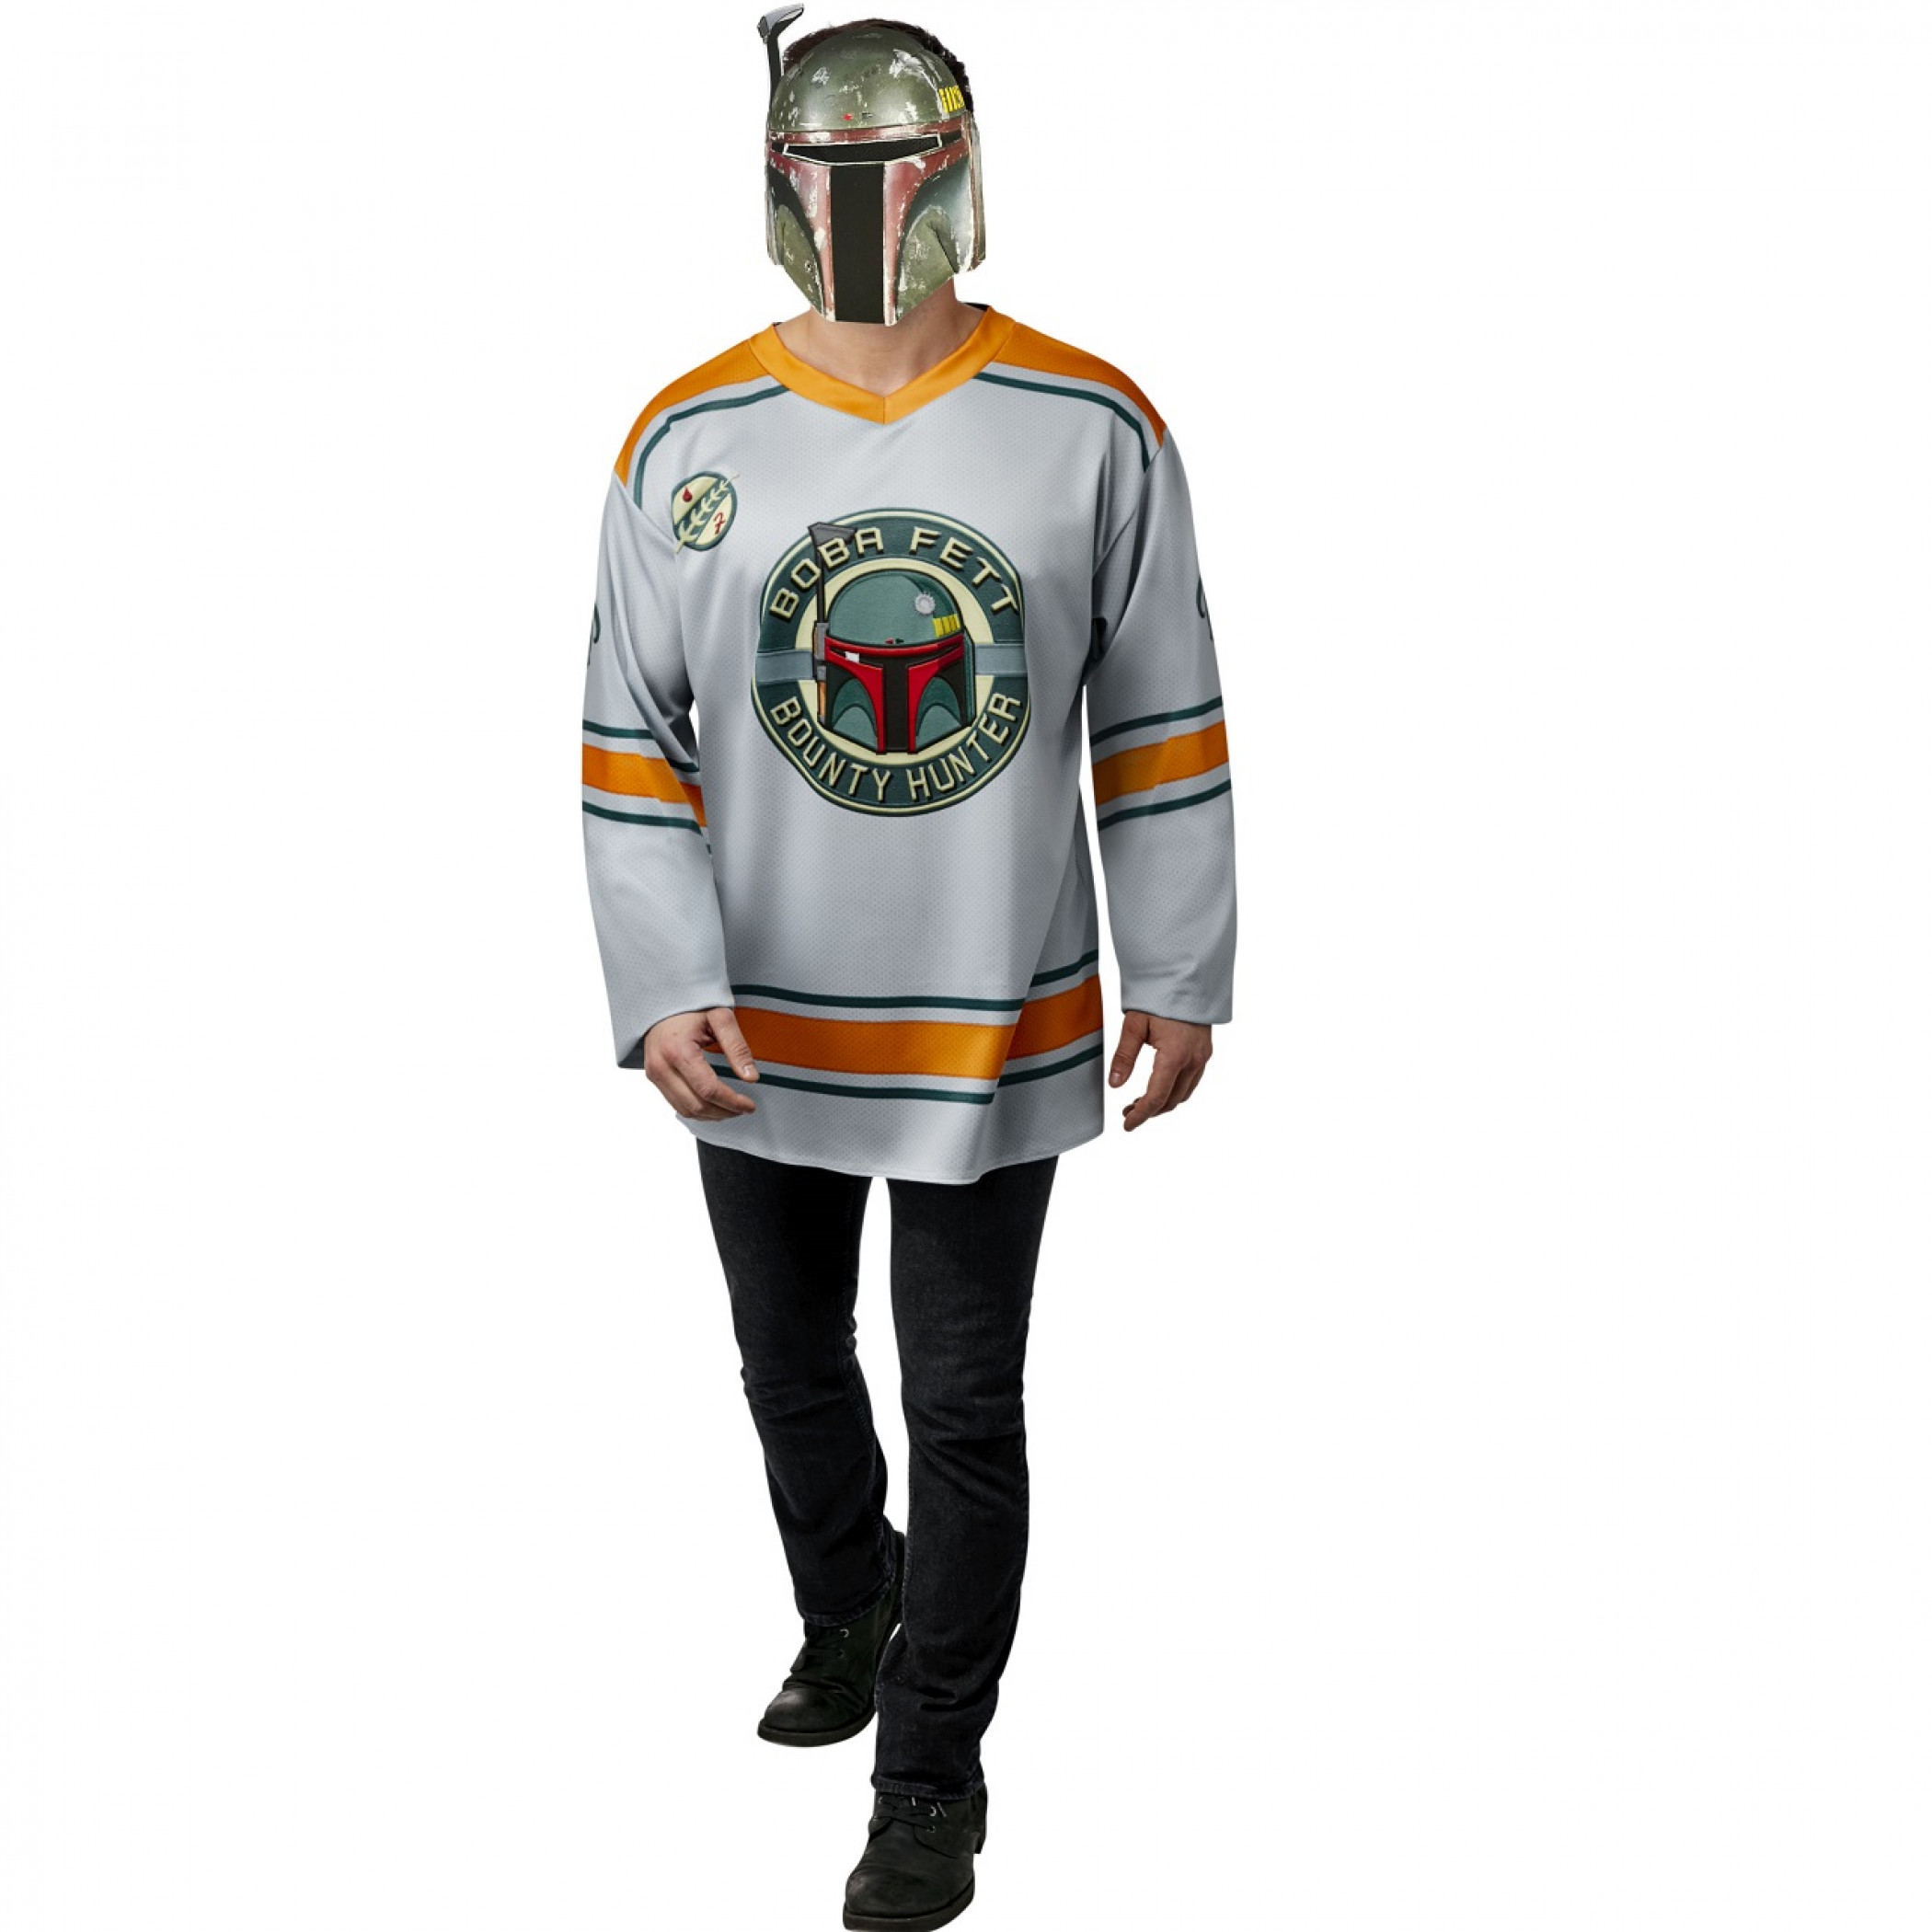 Star Wars Original Trilogy Boba Fett Men's Hockey Jersey and Mask